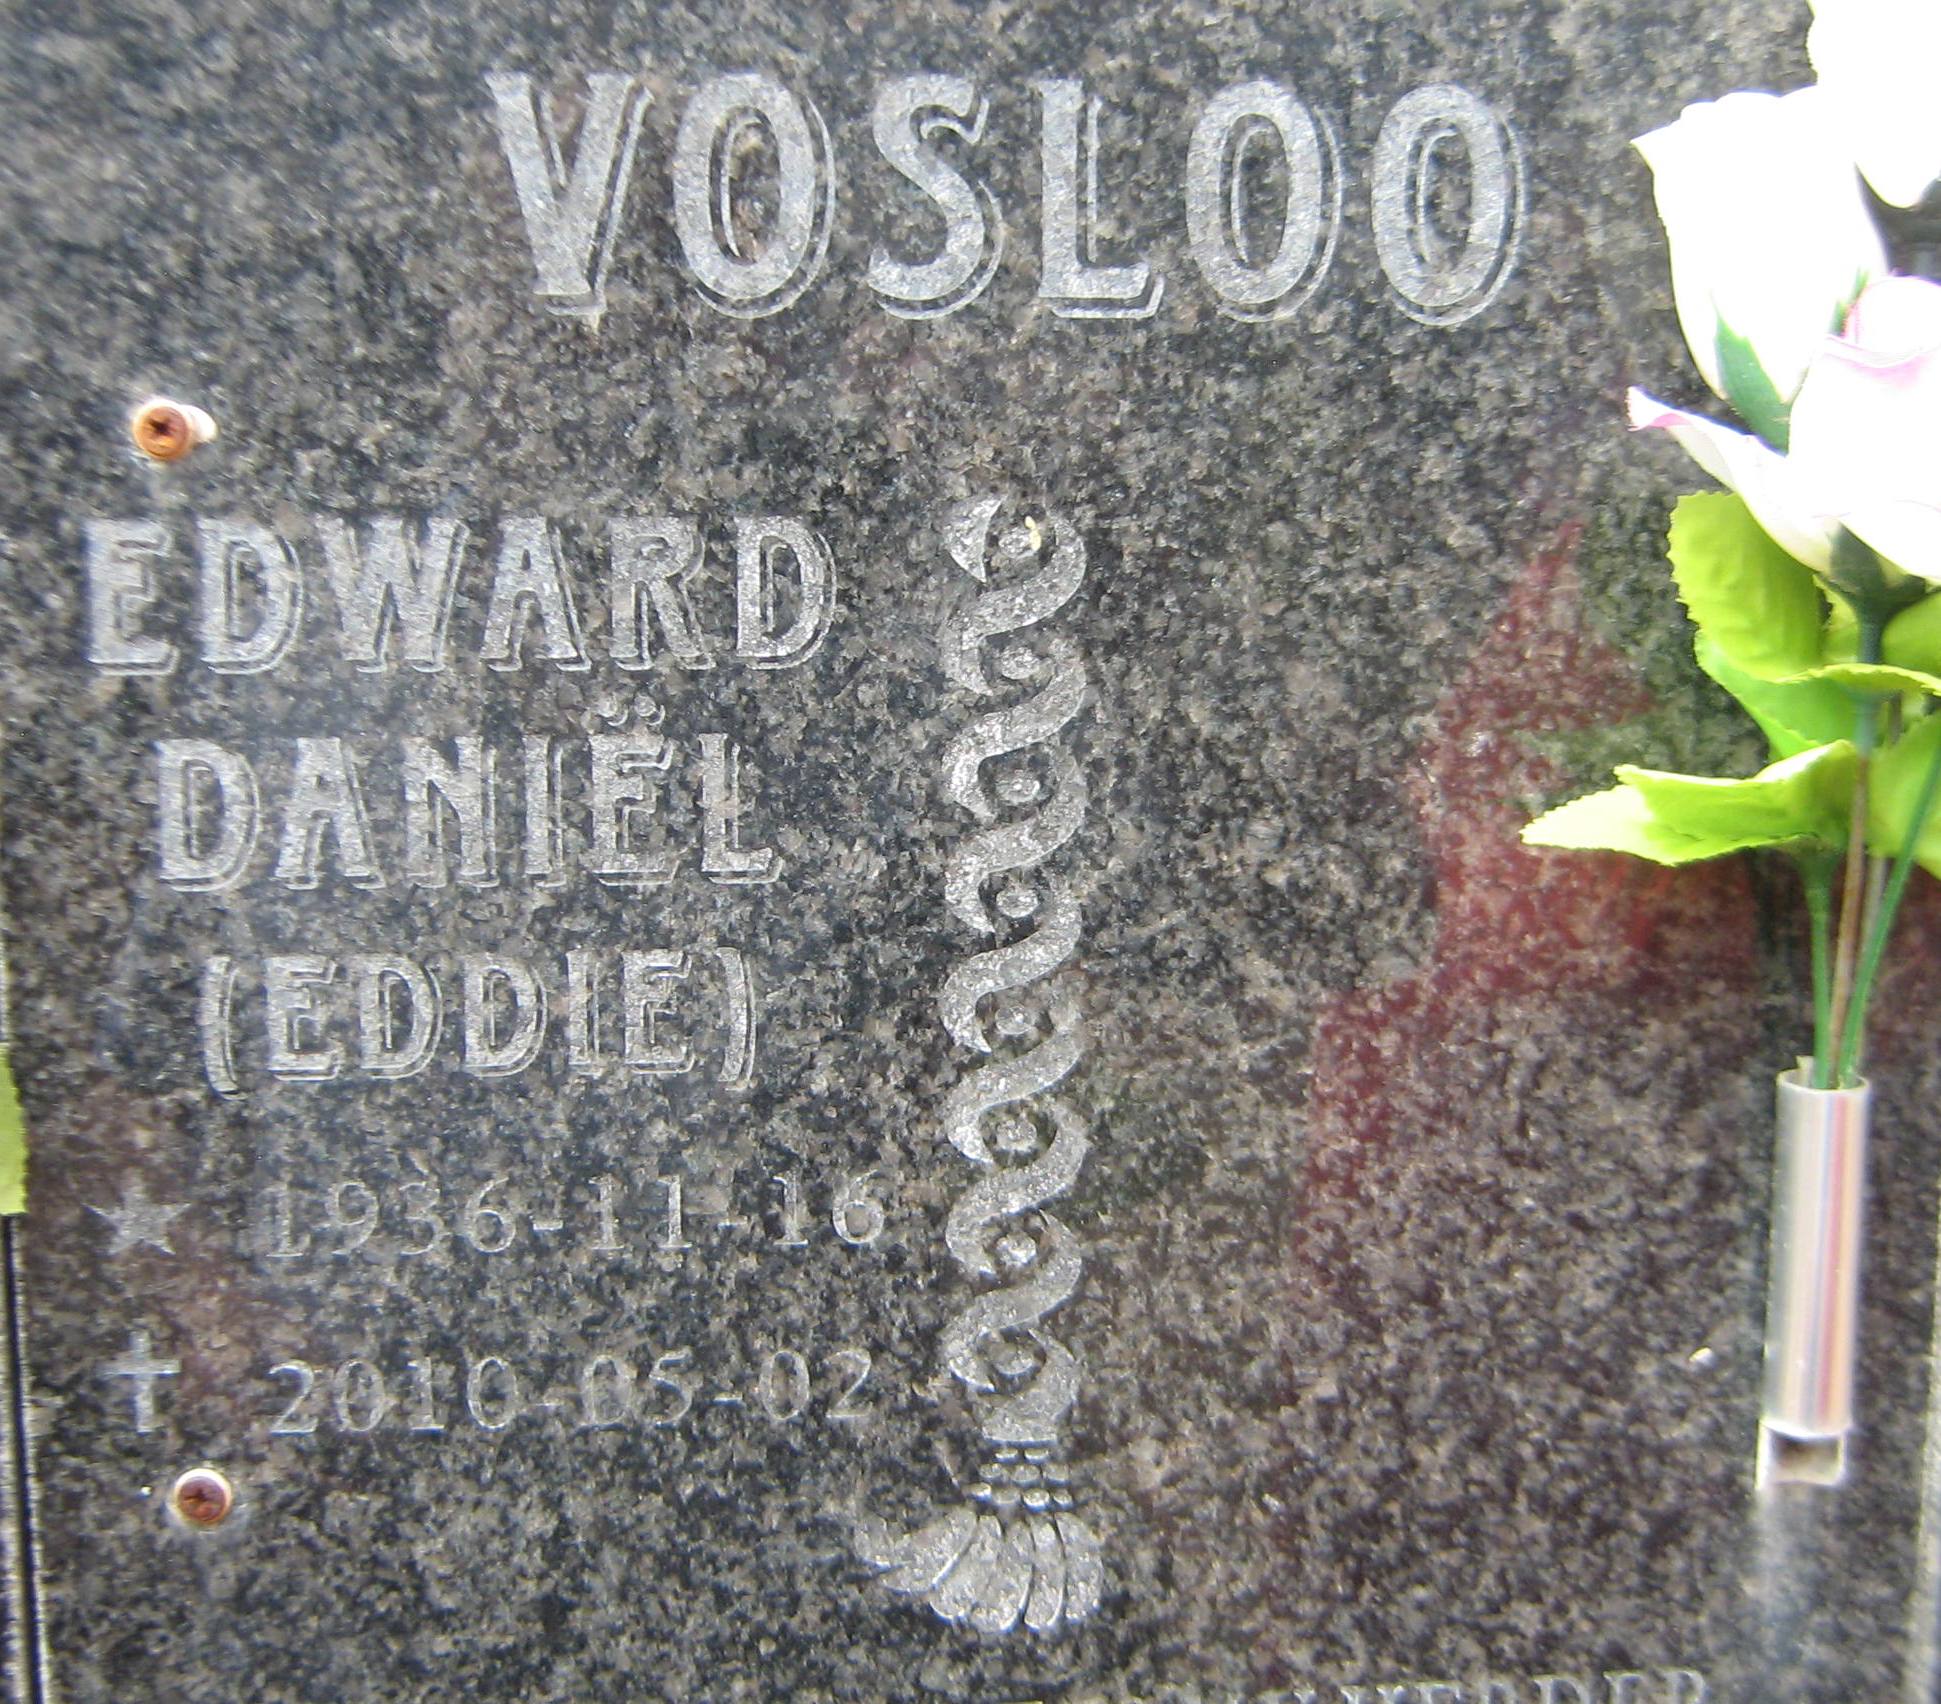 VOSLOO Edward Daniel 1936-2010